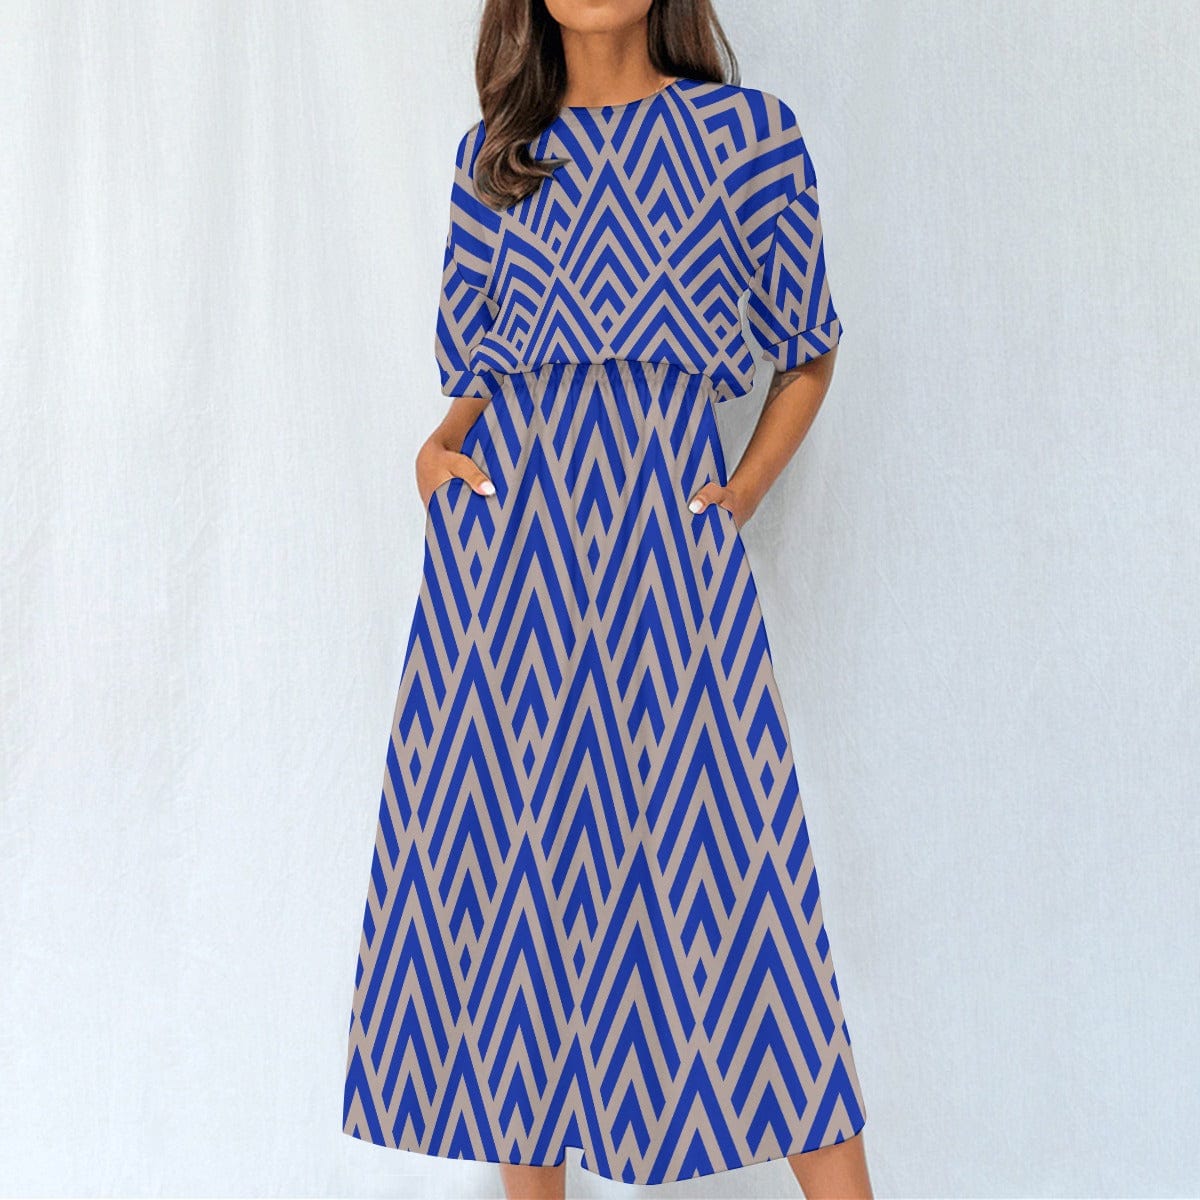 Yoycol Dresses Azul Azteca - All-Over Print Women's Elastic Waist Dress